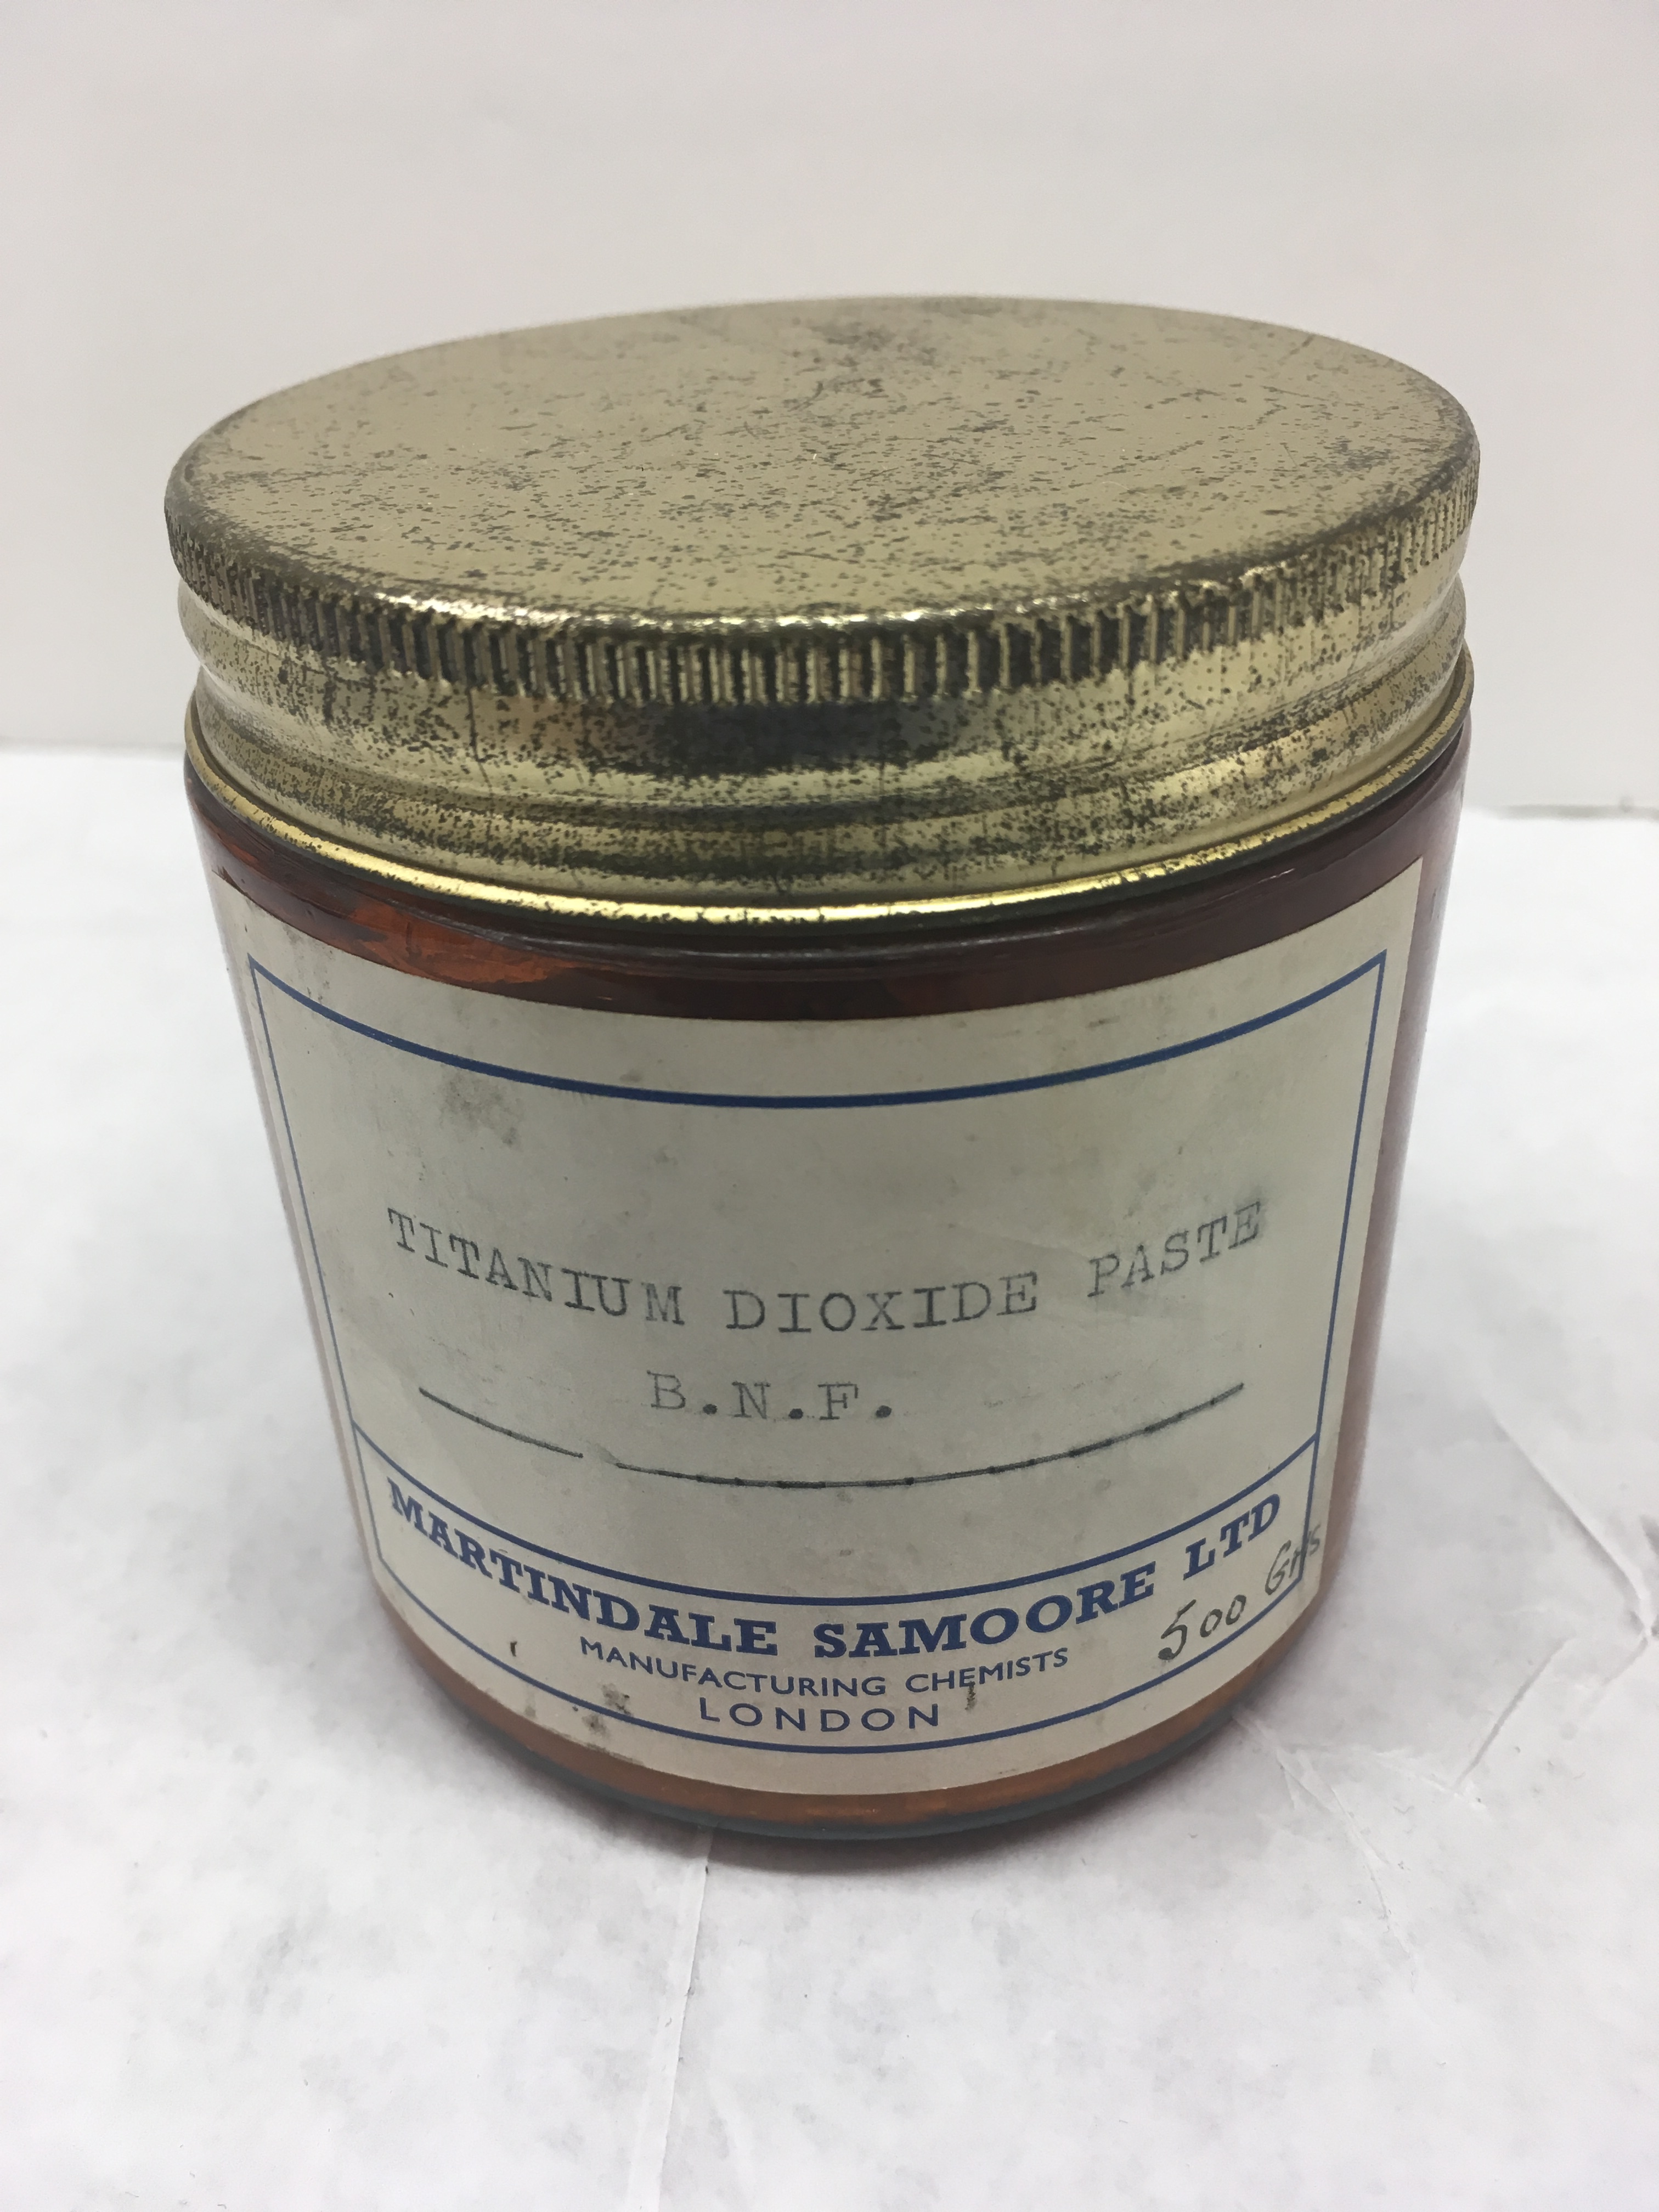 Bottle of titanium dioxide paste by Martindale Samoore, 1963-1967